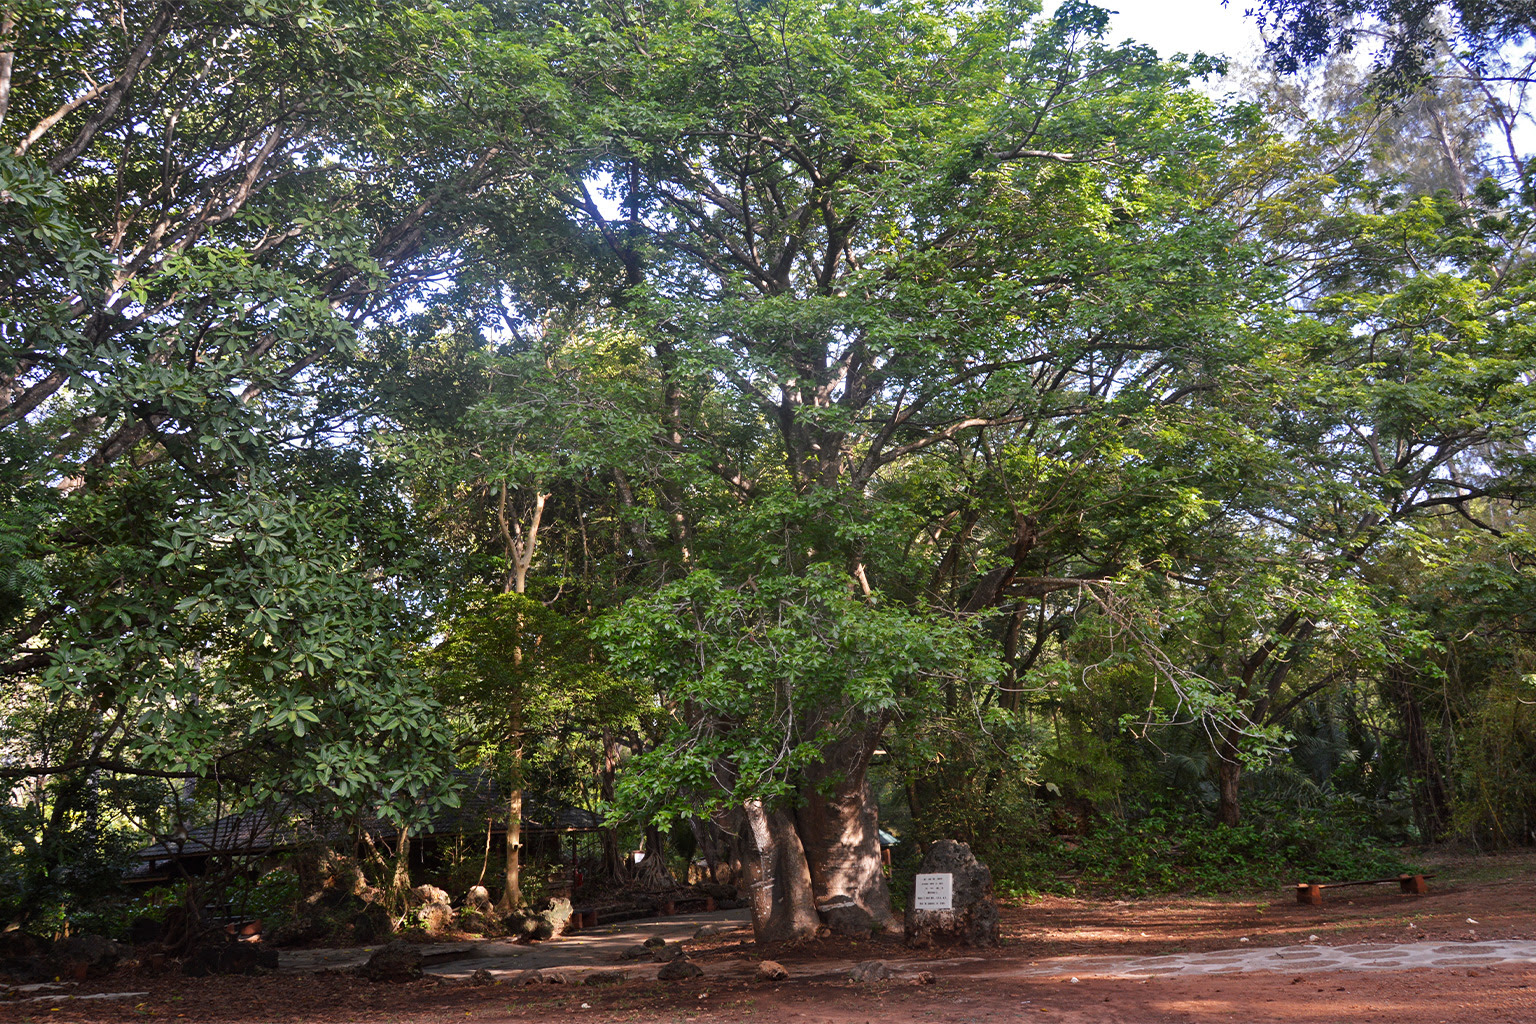 A baobab tree (Adansonia digitata) at the Haller Park in Bamburi, Mombasa.